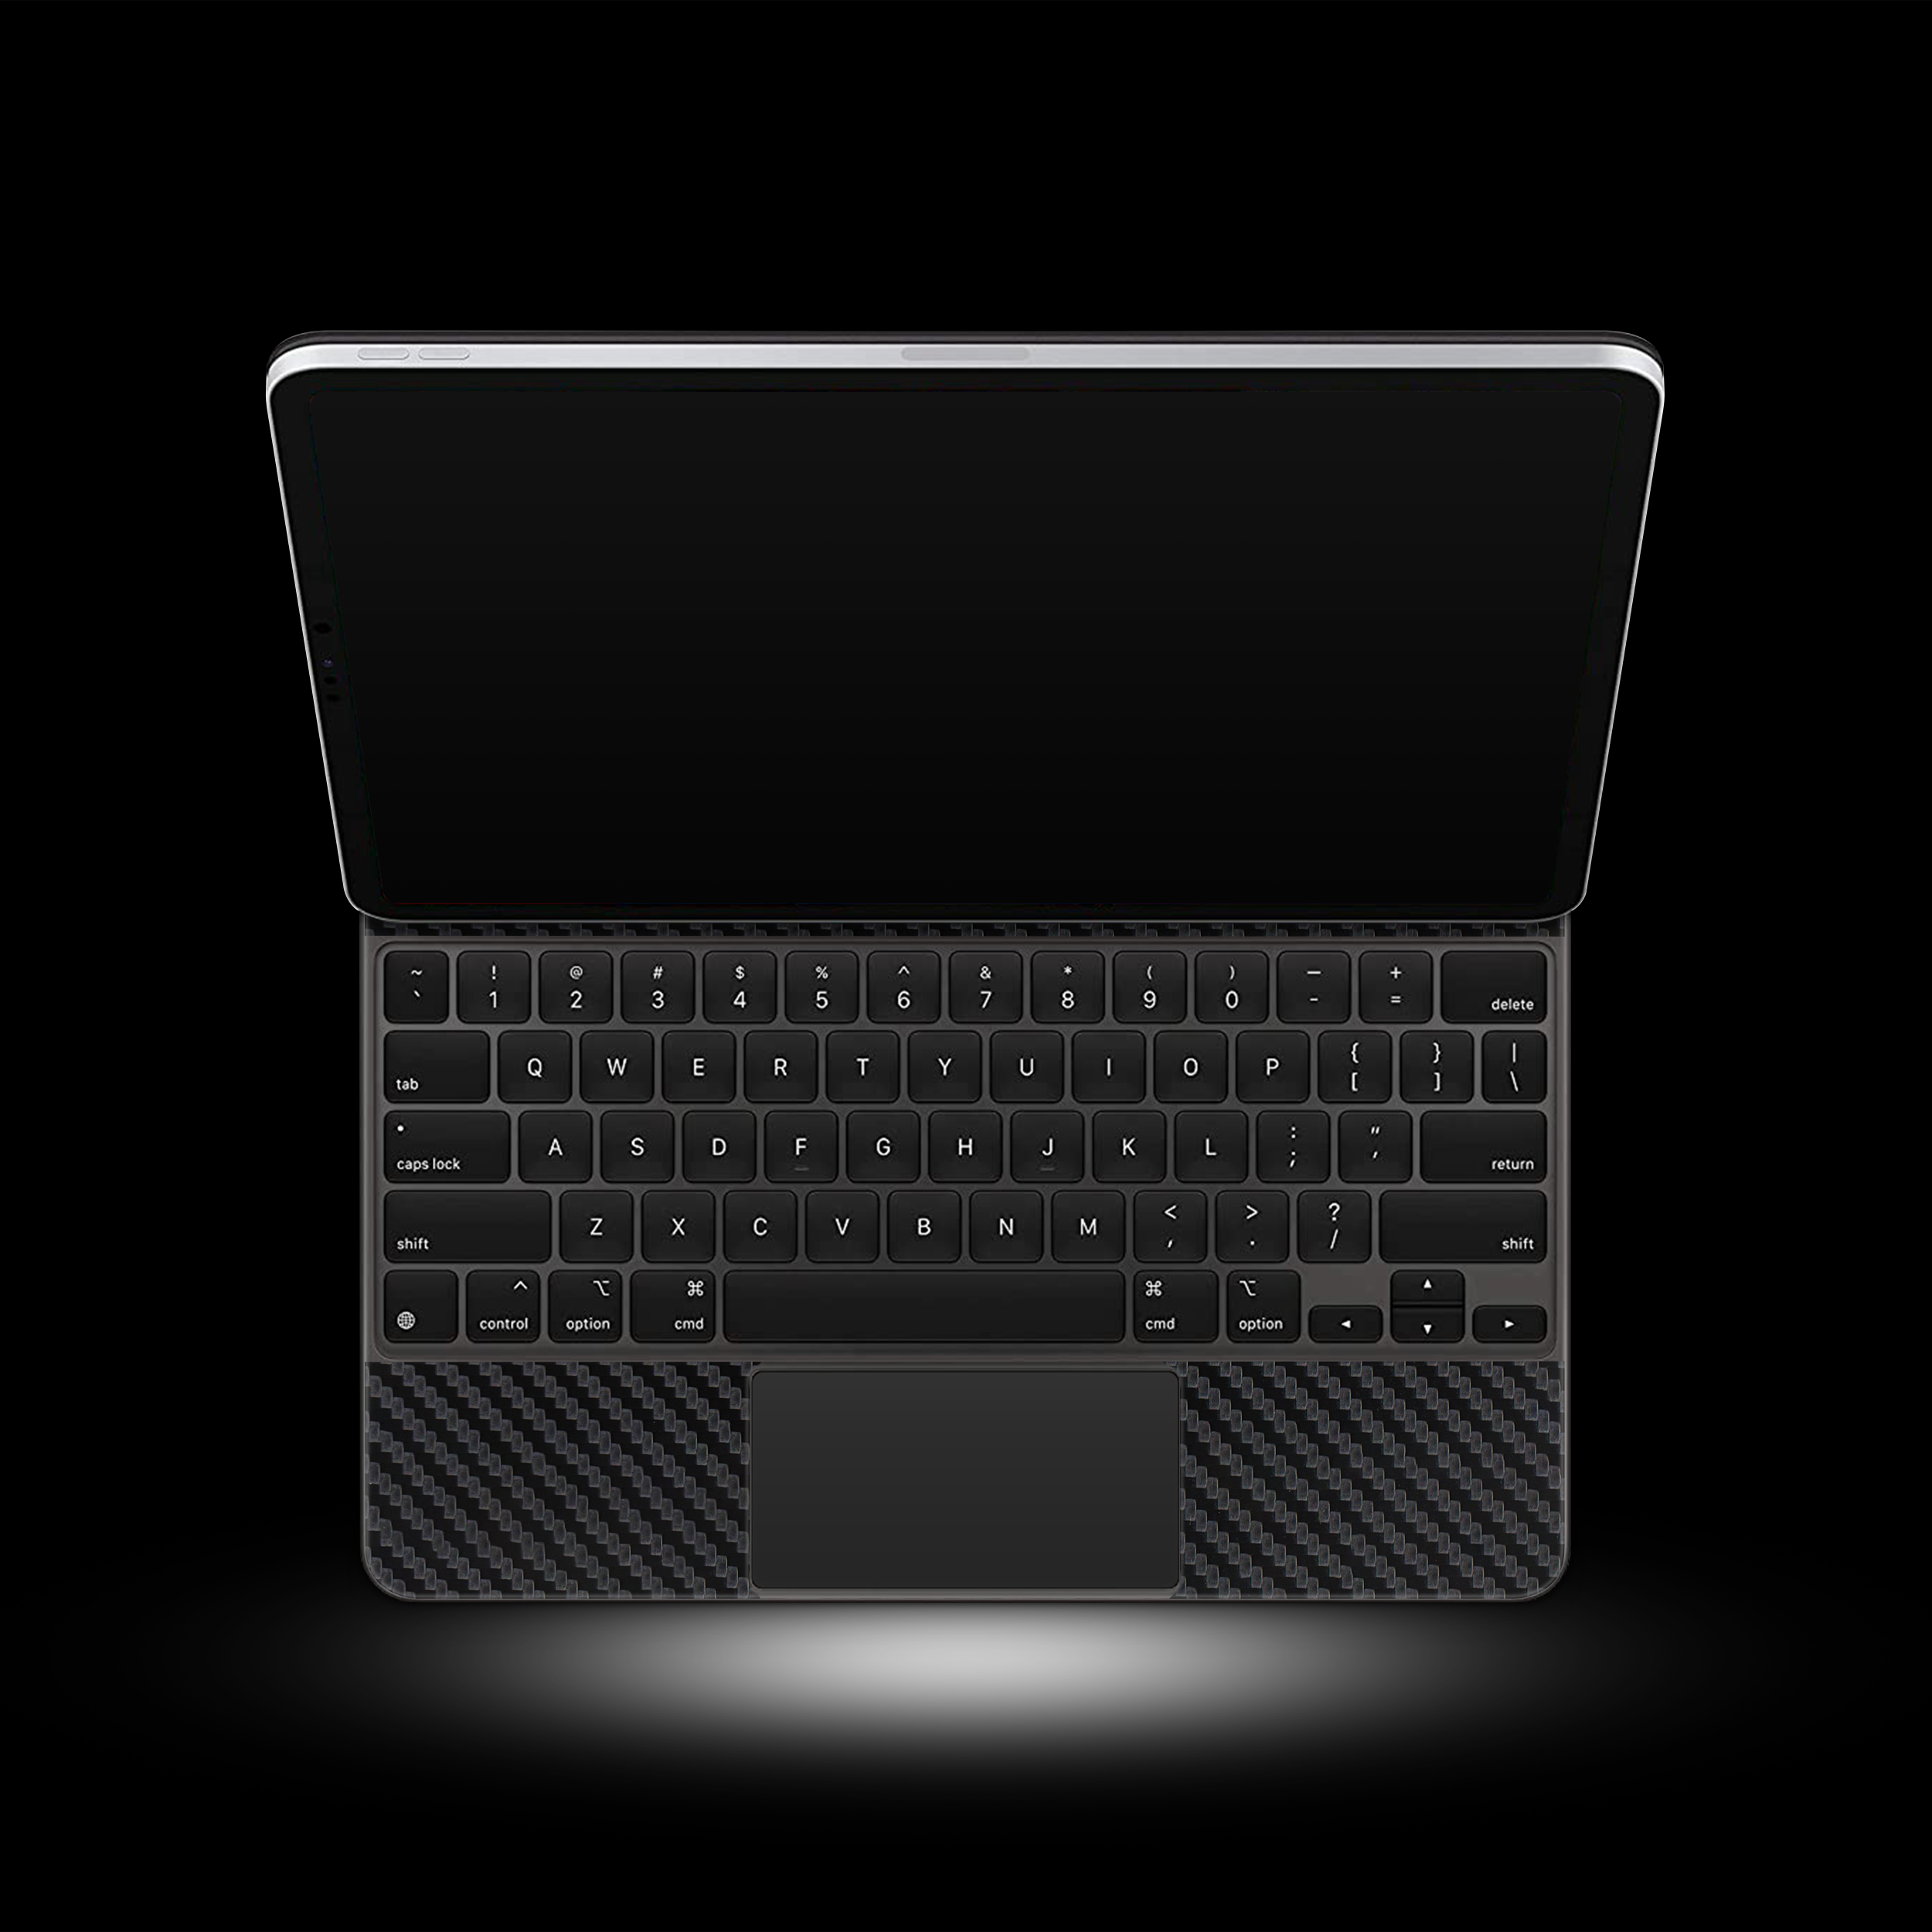 Black Carbon (iPad Magic Keyboard Skin)